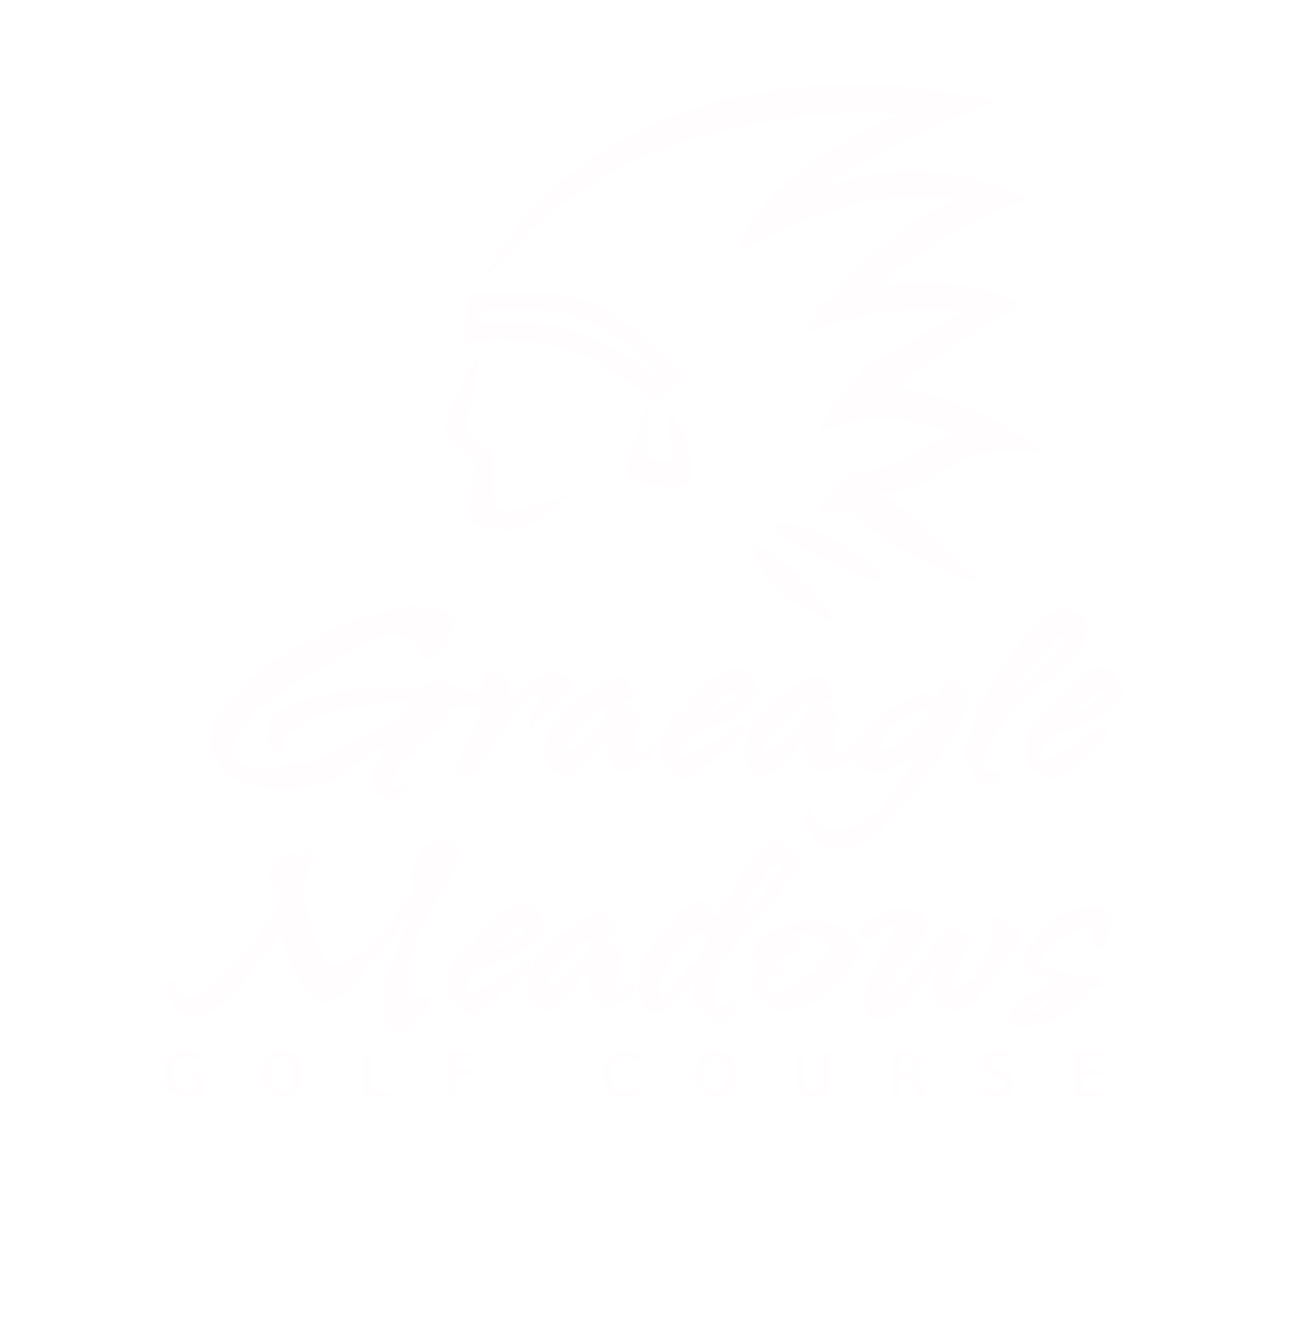  Graeagle Meadows Golf Course